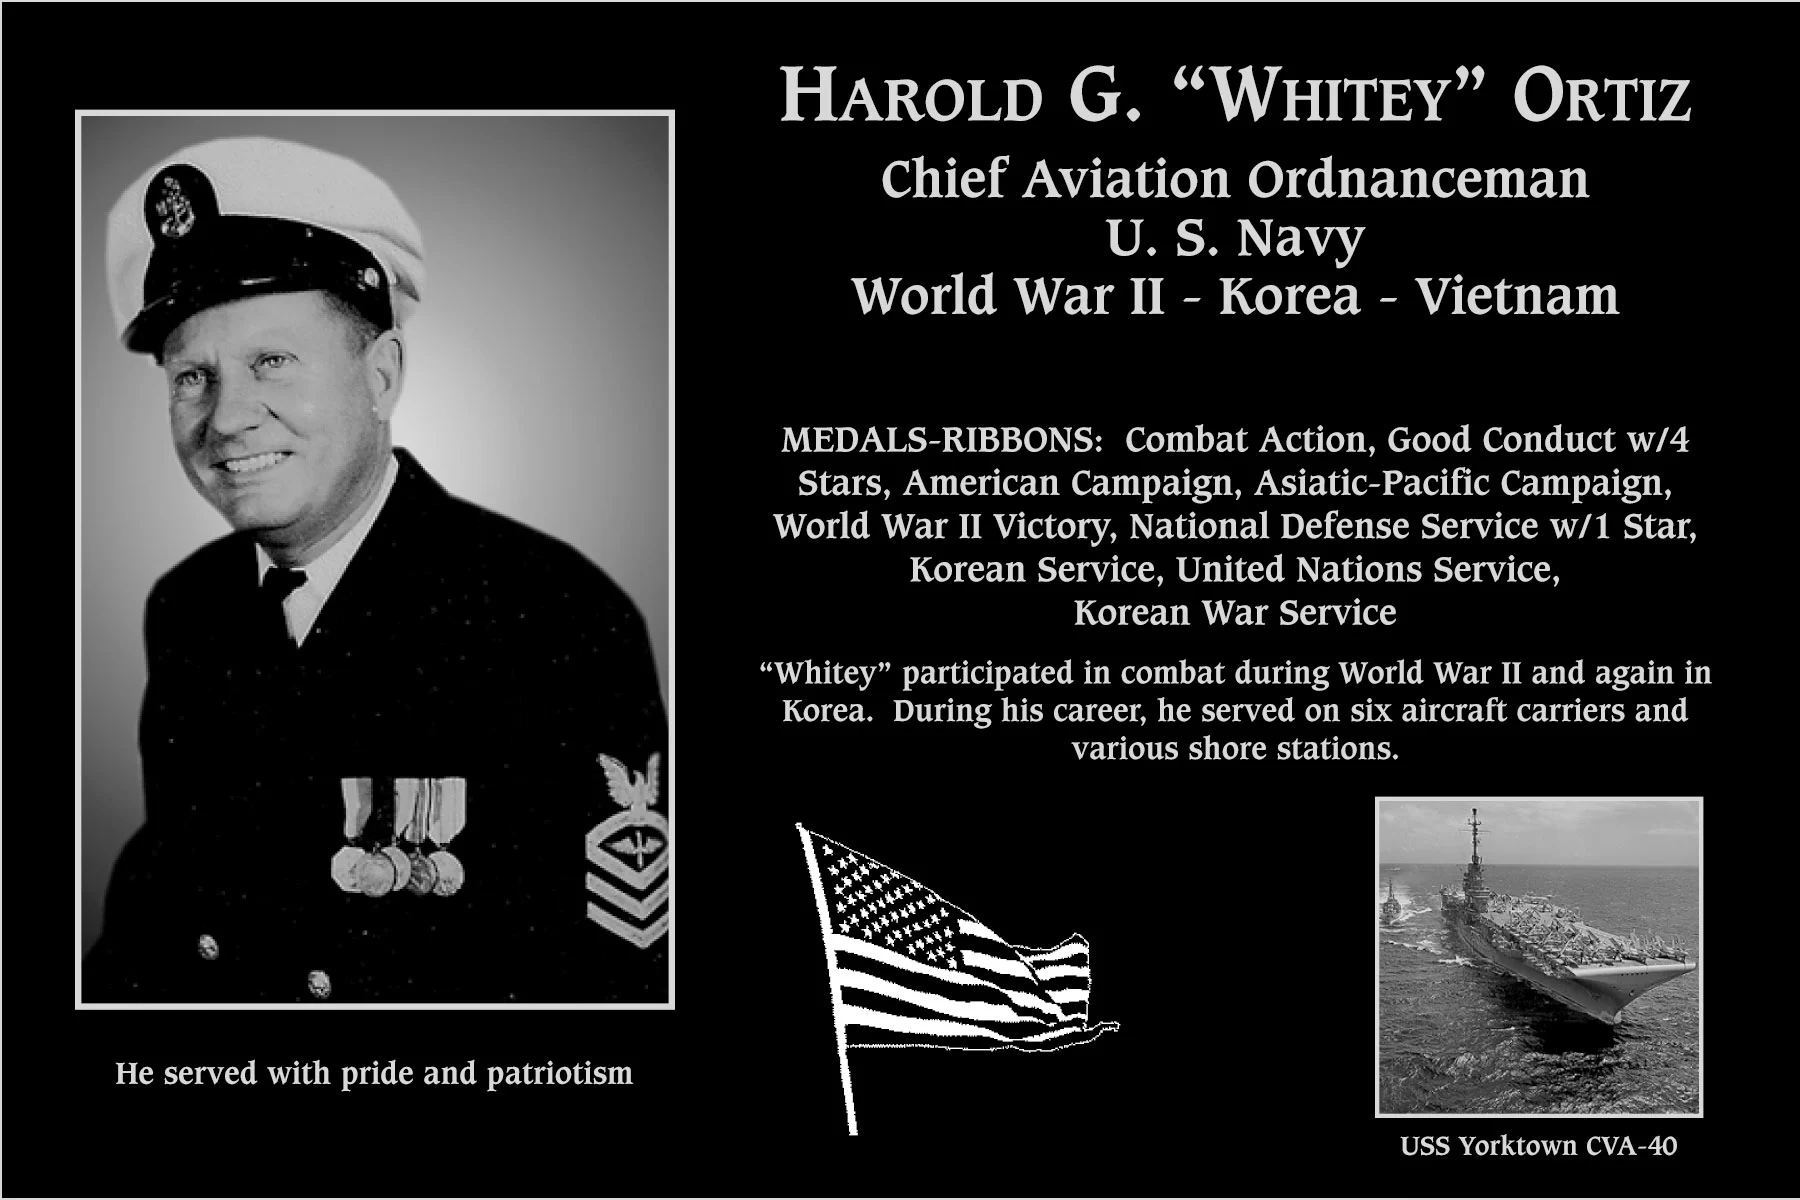 Harold G. "Whitey" Ortiz